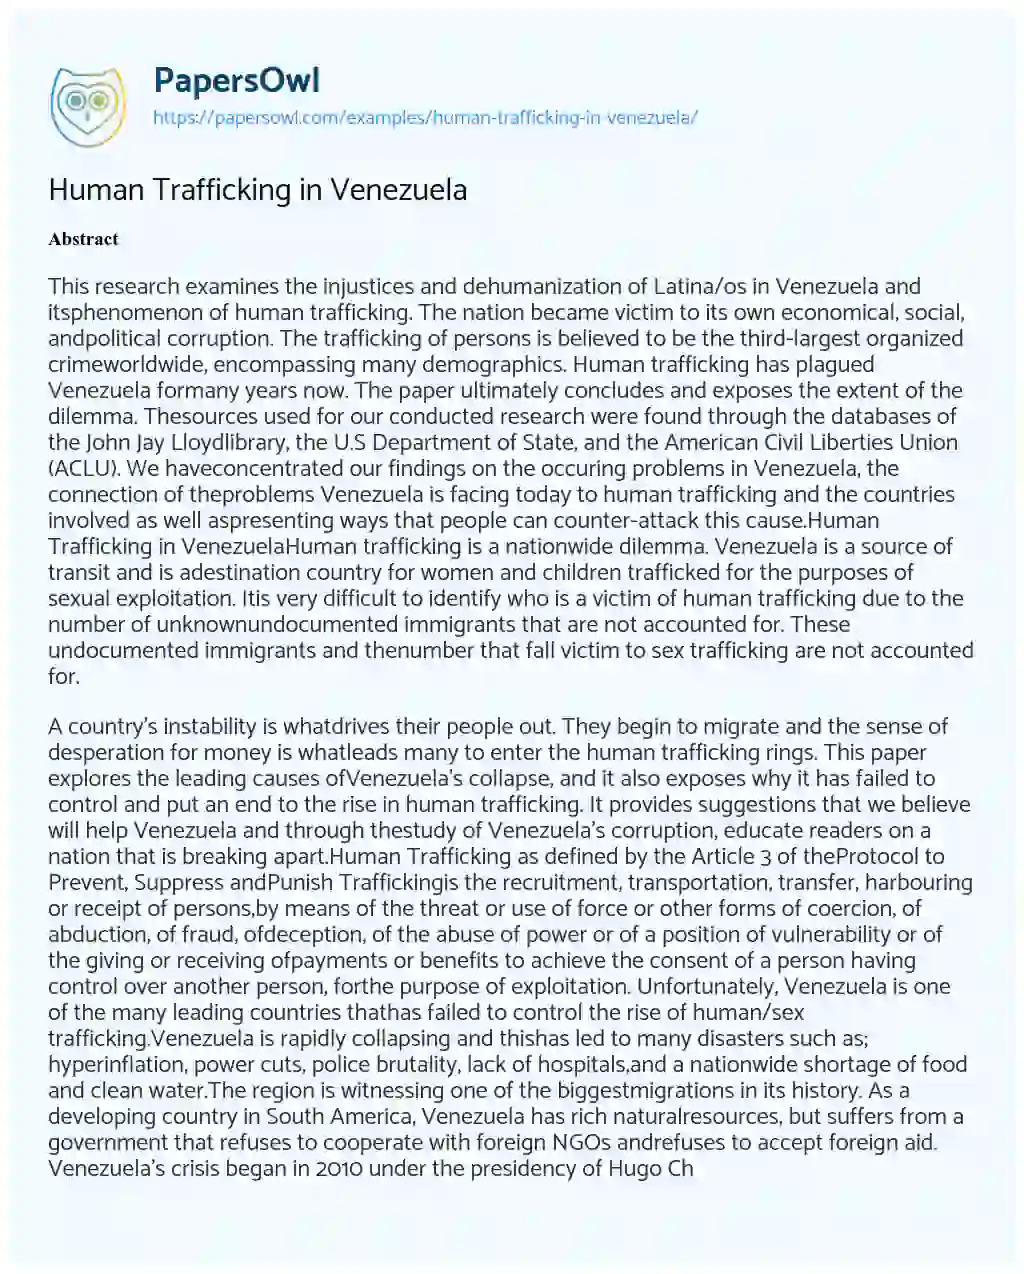 Essay on Human Trafficking in Venezuela